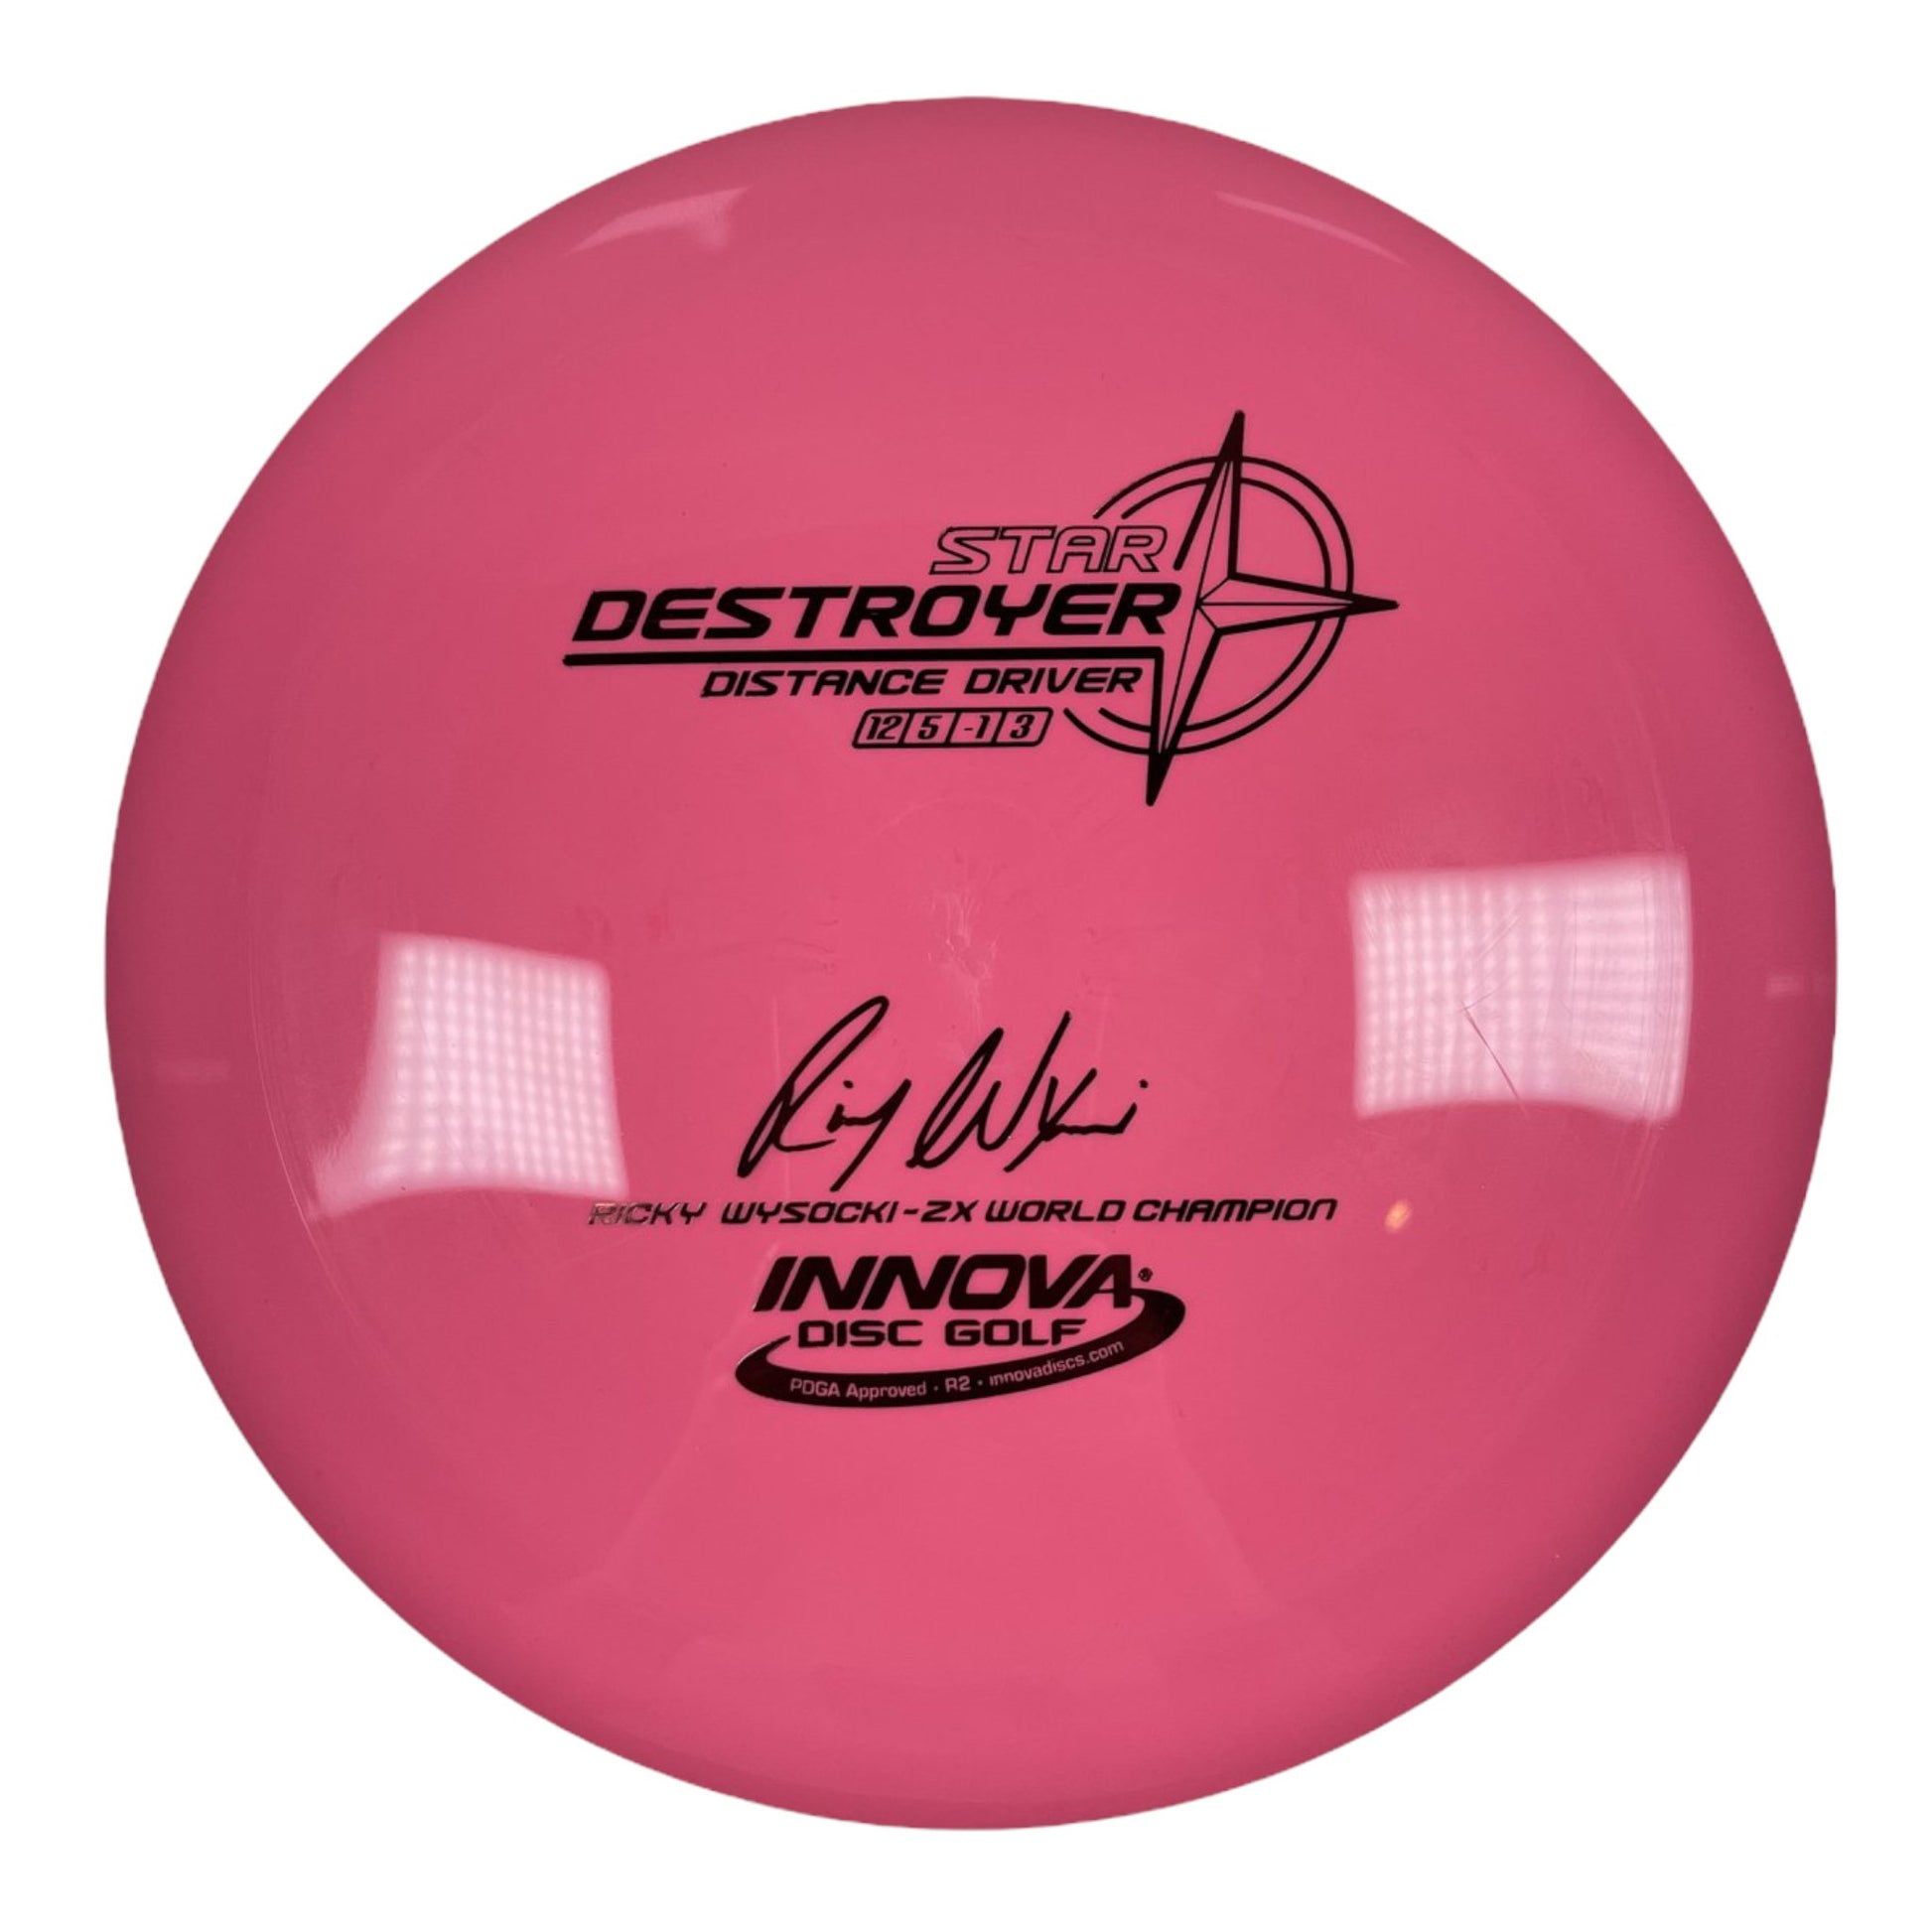 Innova Champion Discs Destroyer | Star | Pink/Bronze 172g (Ricky Wysocki) Disc Golf